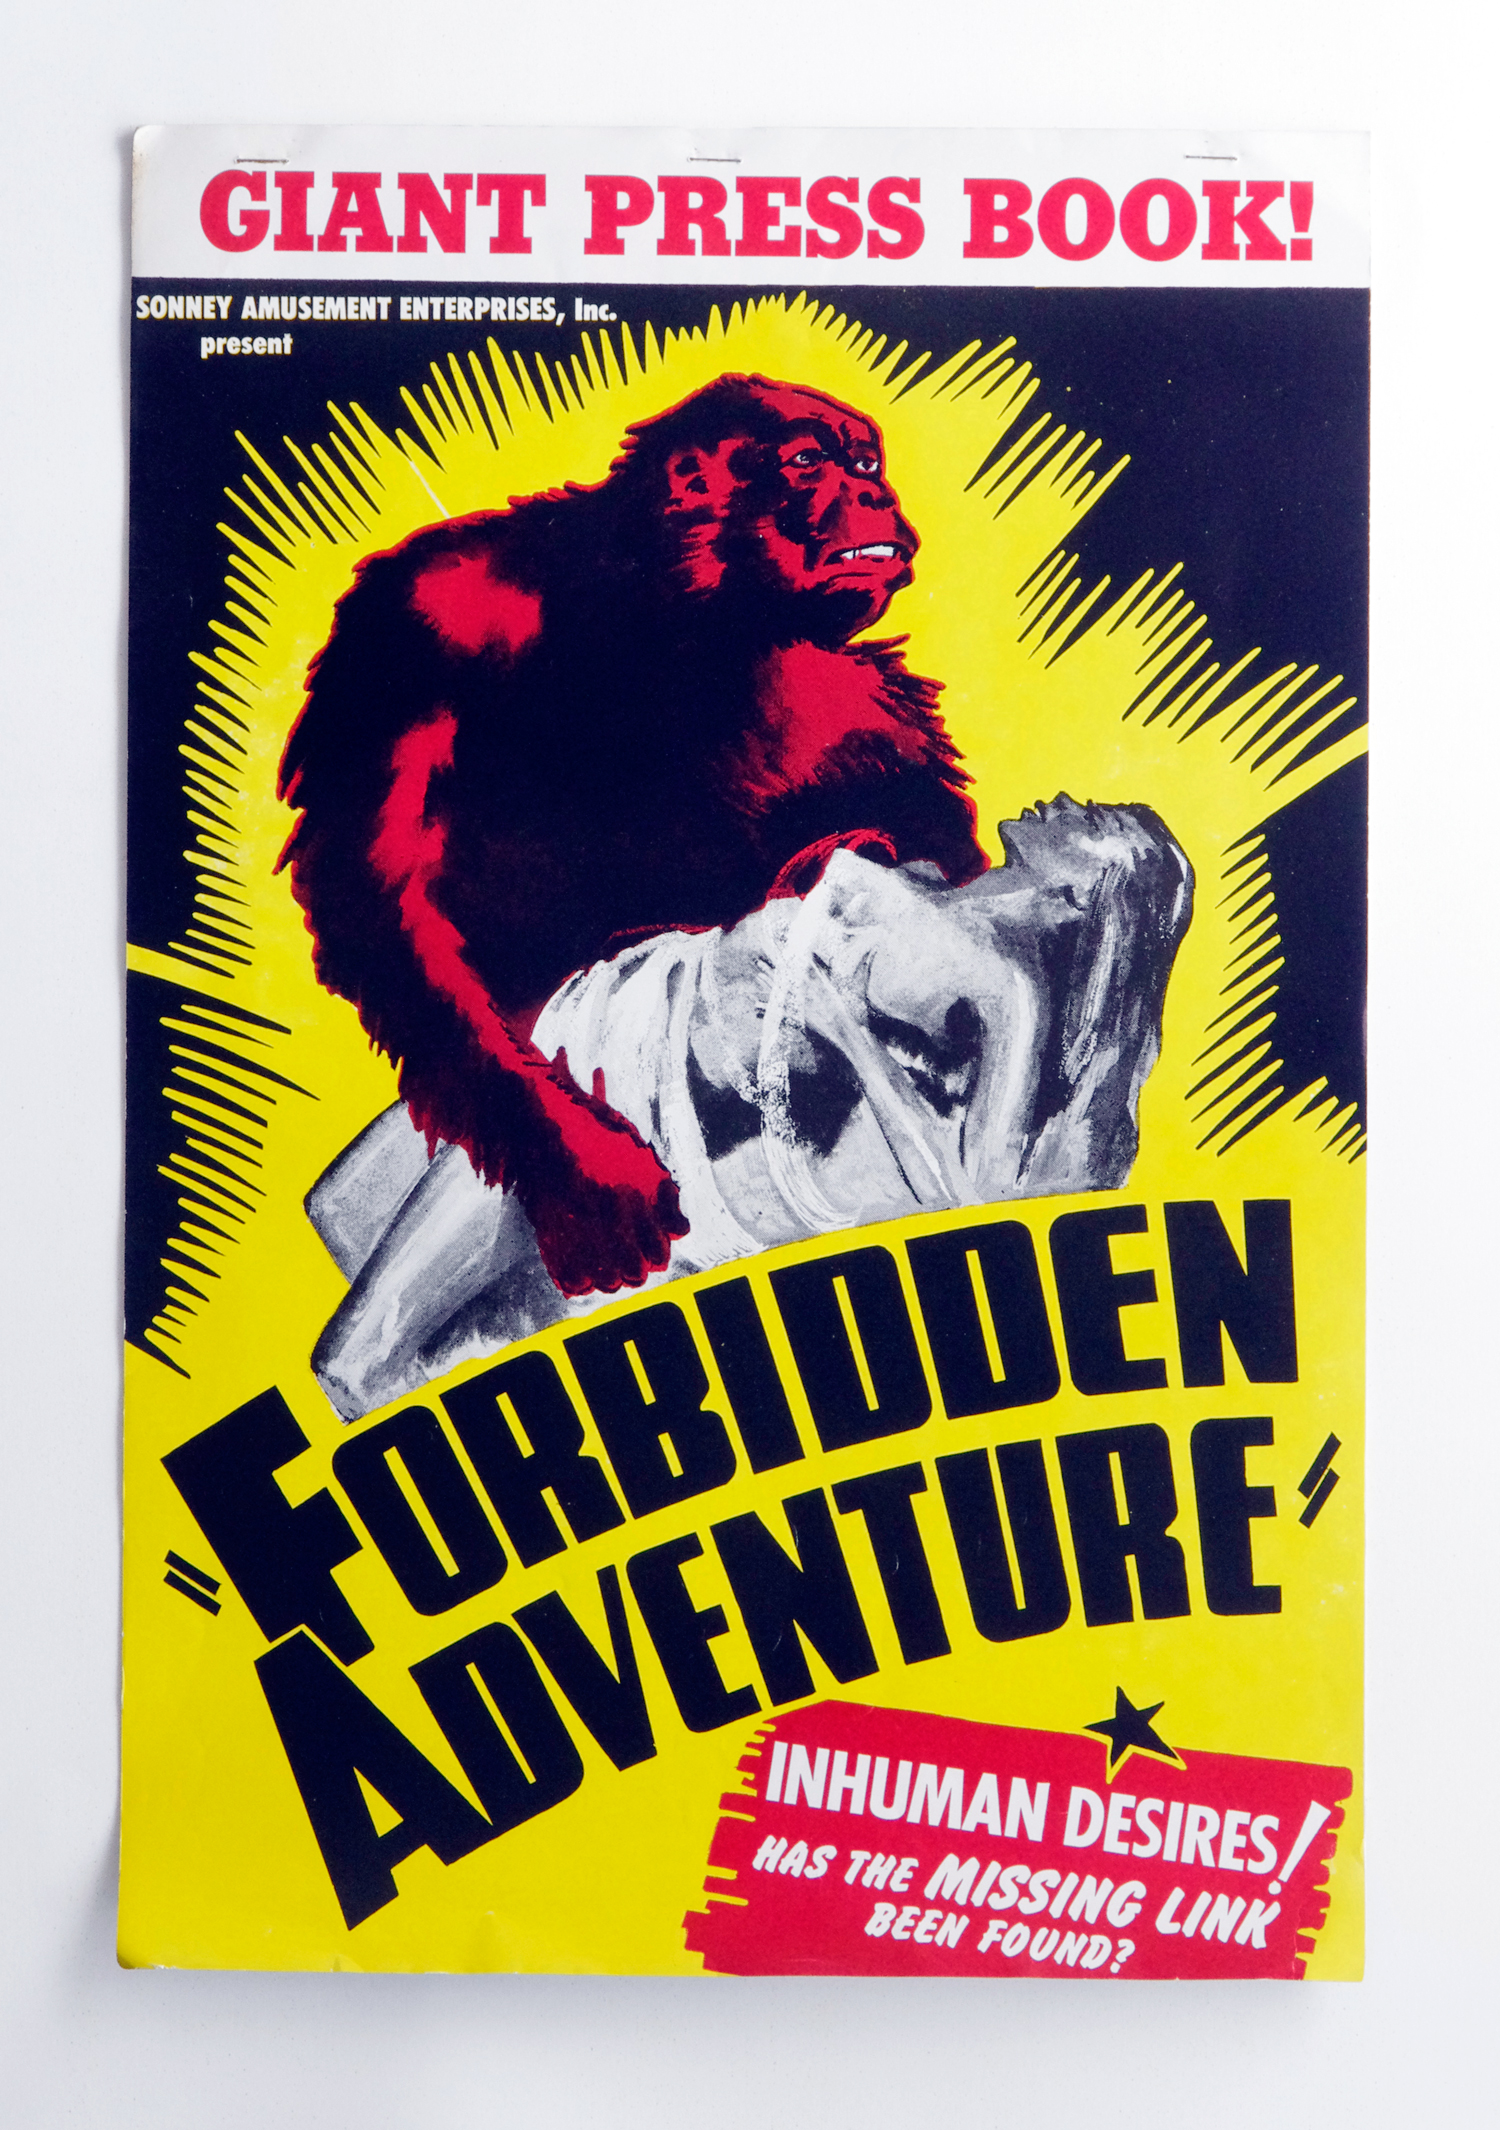 Forbidden Adventure Book Poster Movie Original Vintage aka Gorilla Woman Angkor 1935